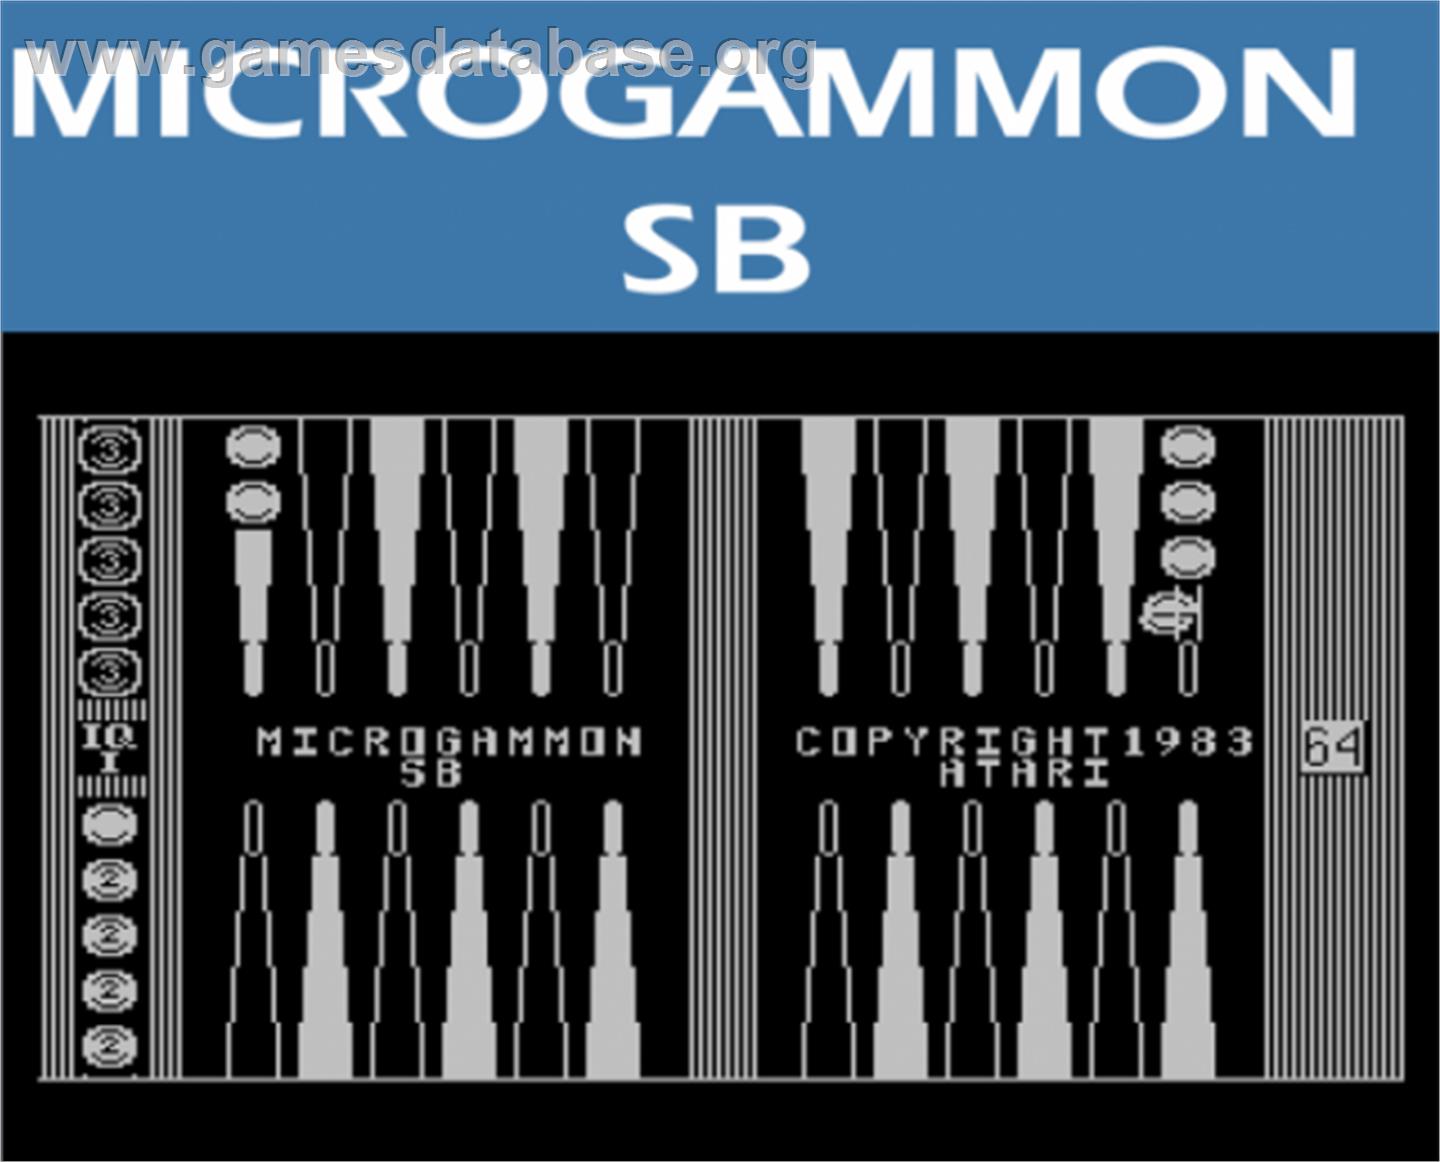 Microgammon SB - Atari 5200 - Artwork - Cartridge Top